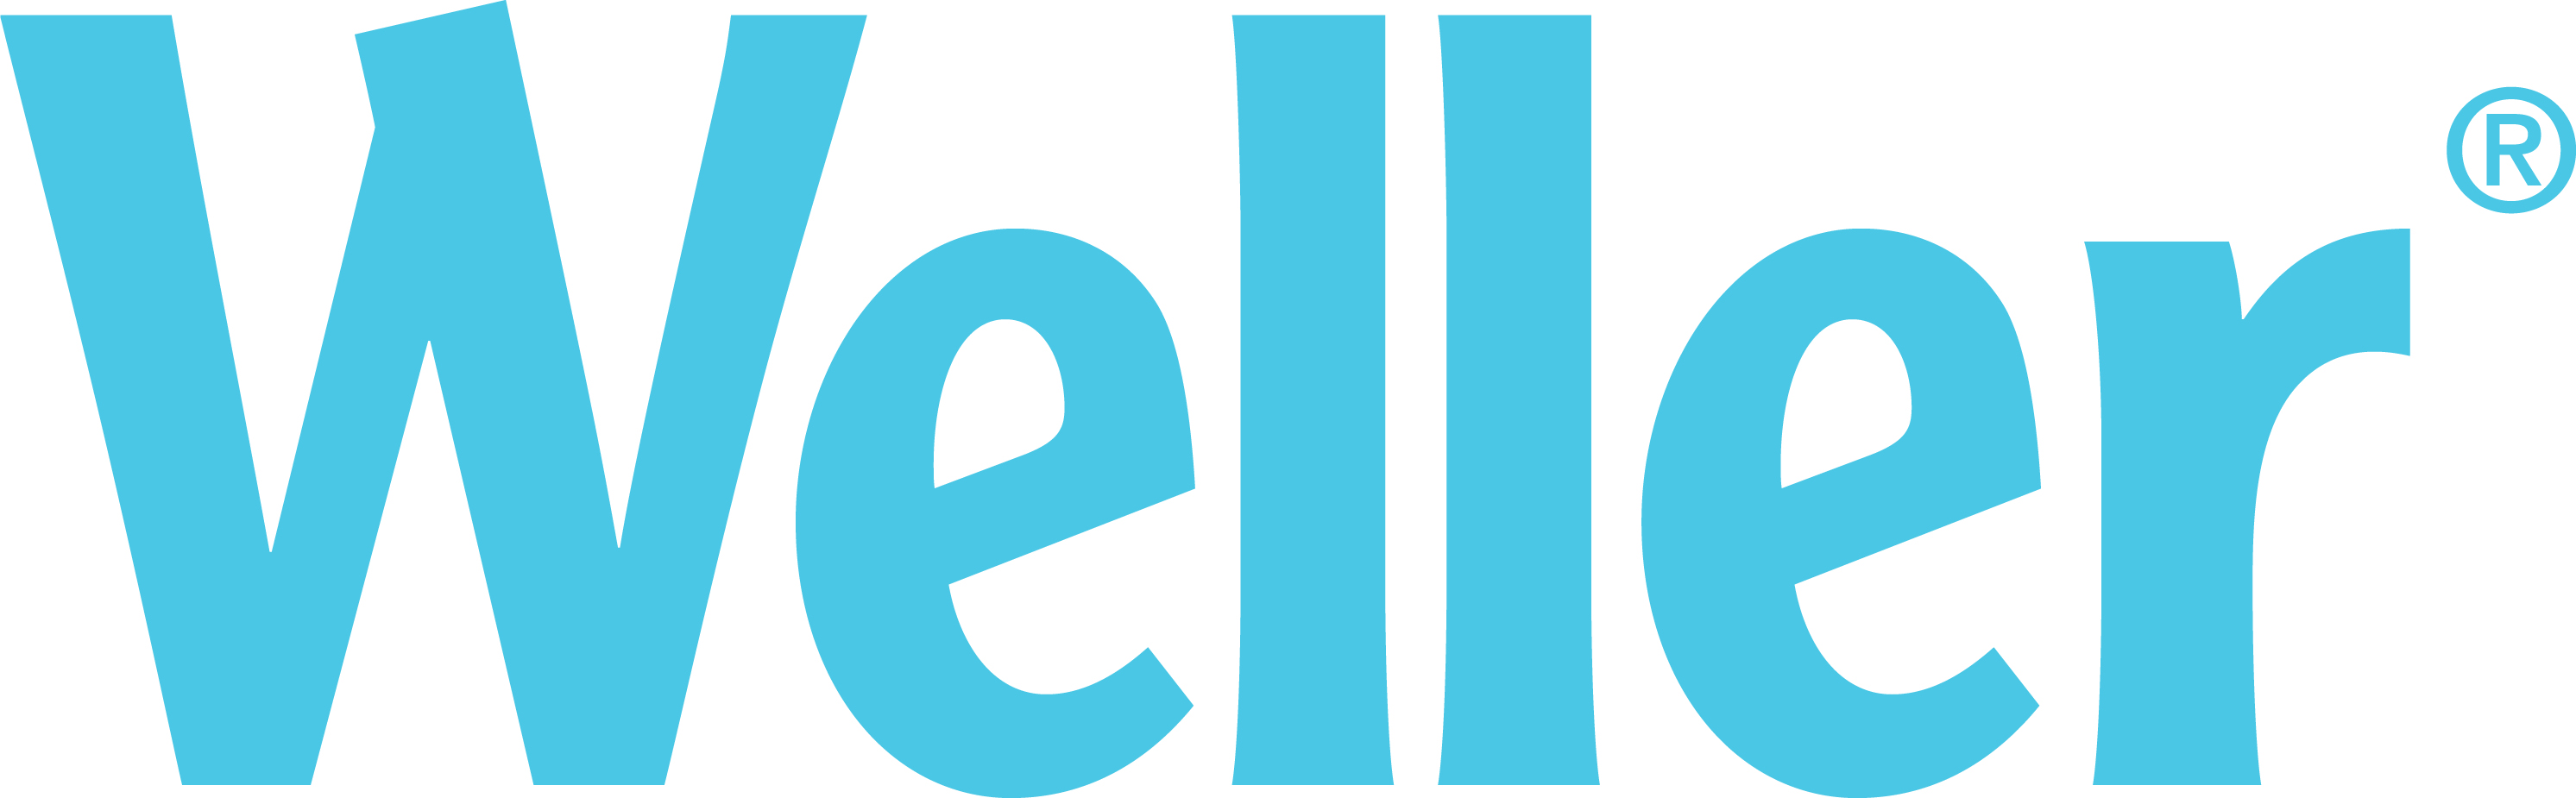 Weller-Logo_2011_60-0-8-0